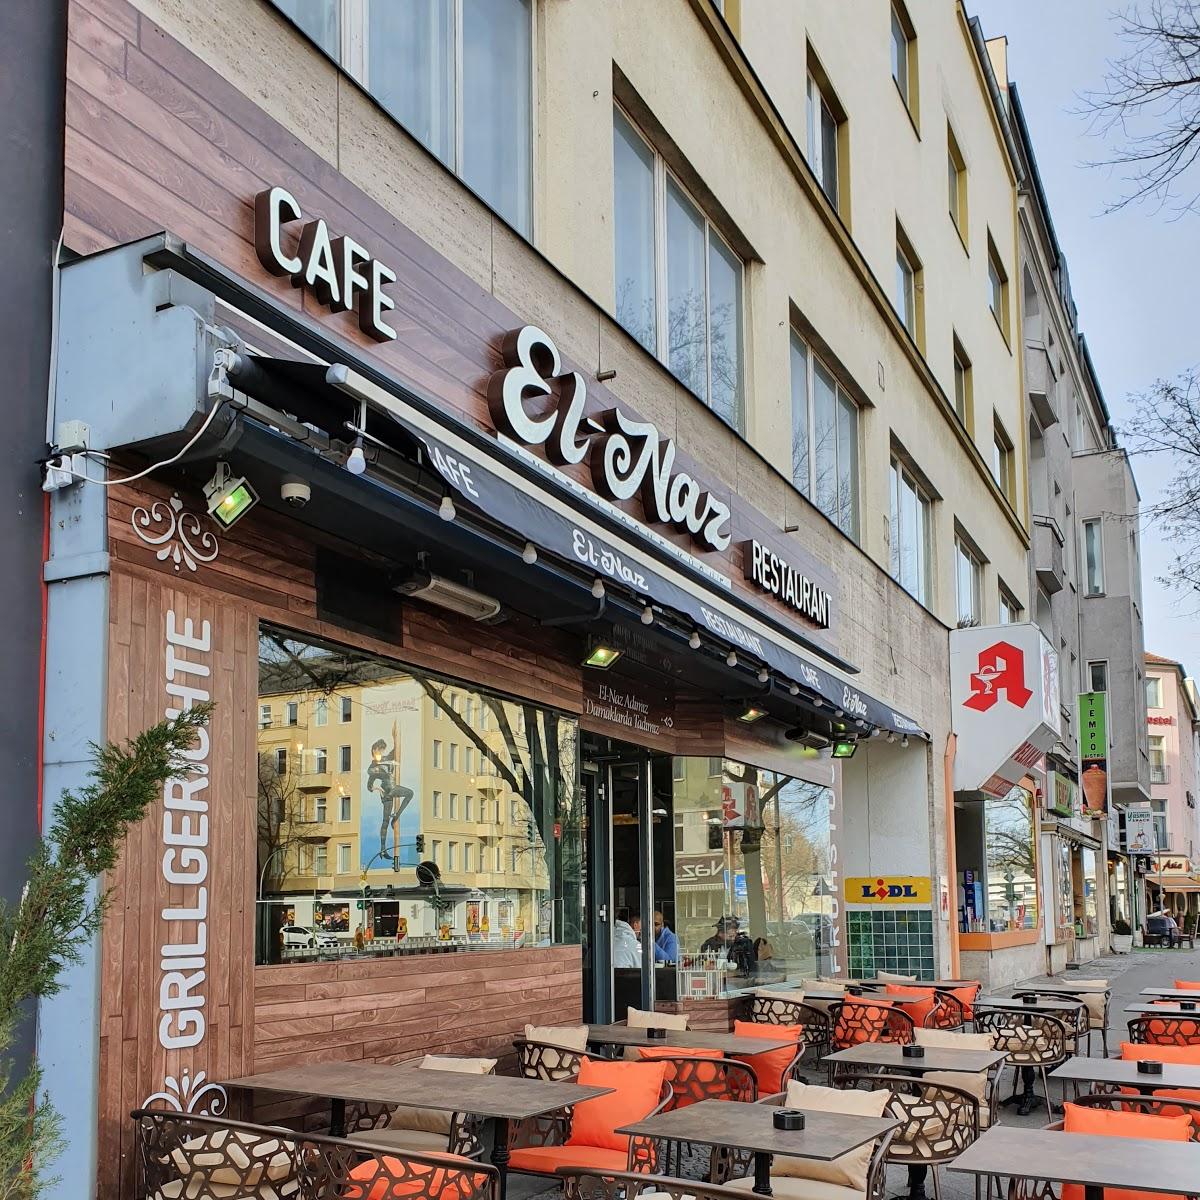 Restaurant "EL-NAZ Cafe & Restaurant" in Berlin